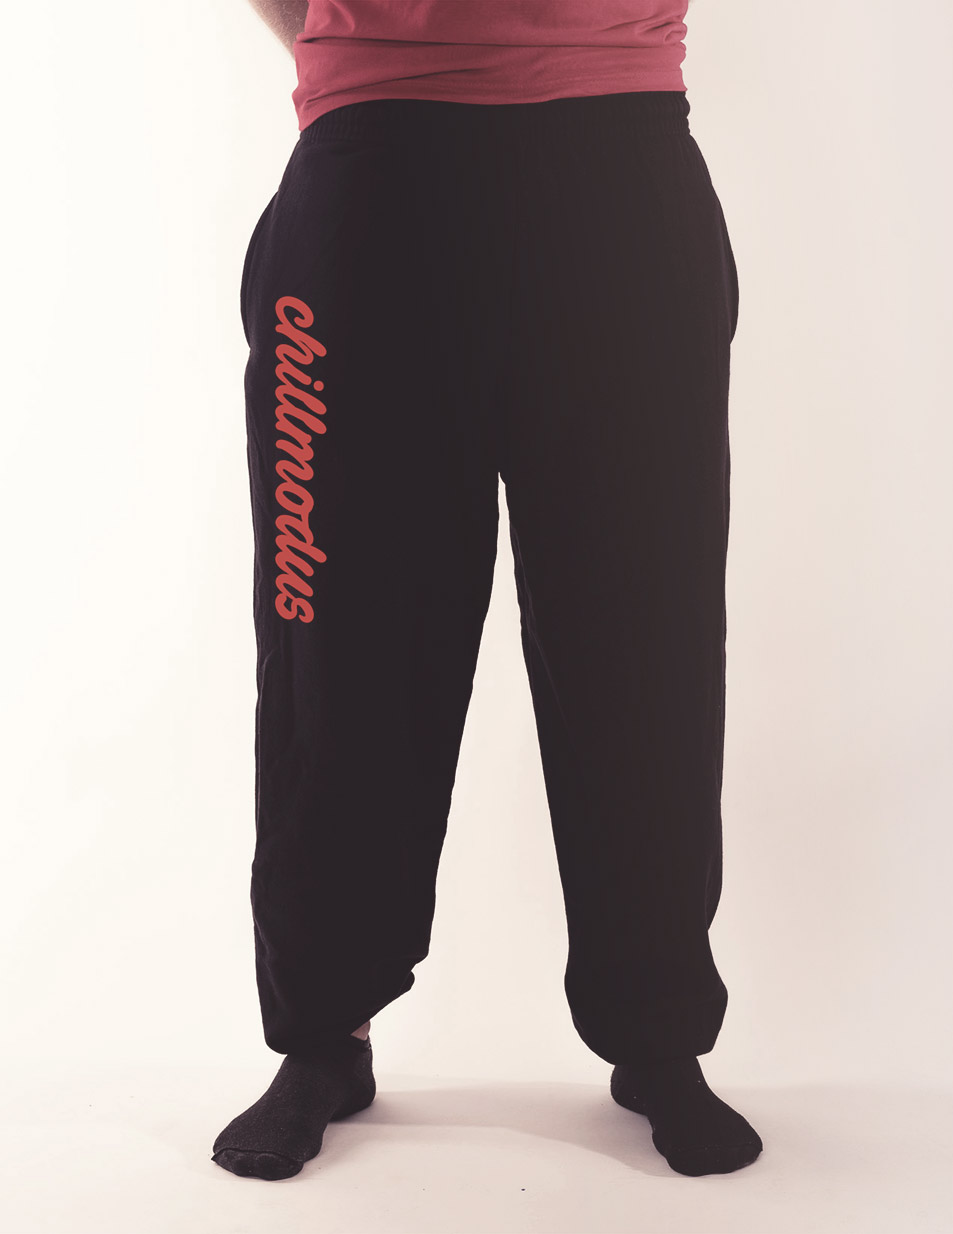 Family Pack - Premium Herren-Jogginghose Chillmodus (2+1 = 3 Hosen) rot auf schwarz